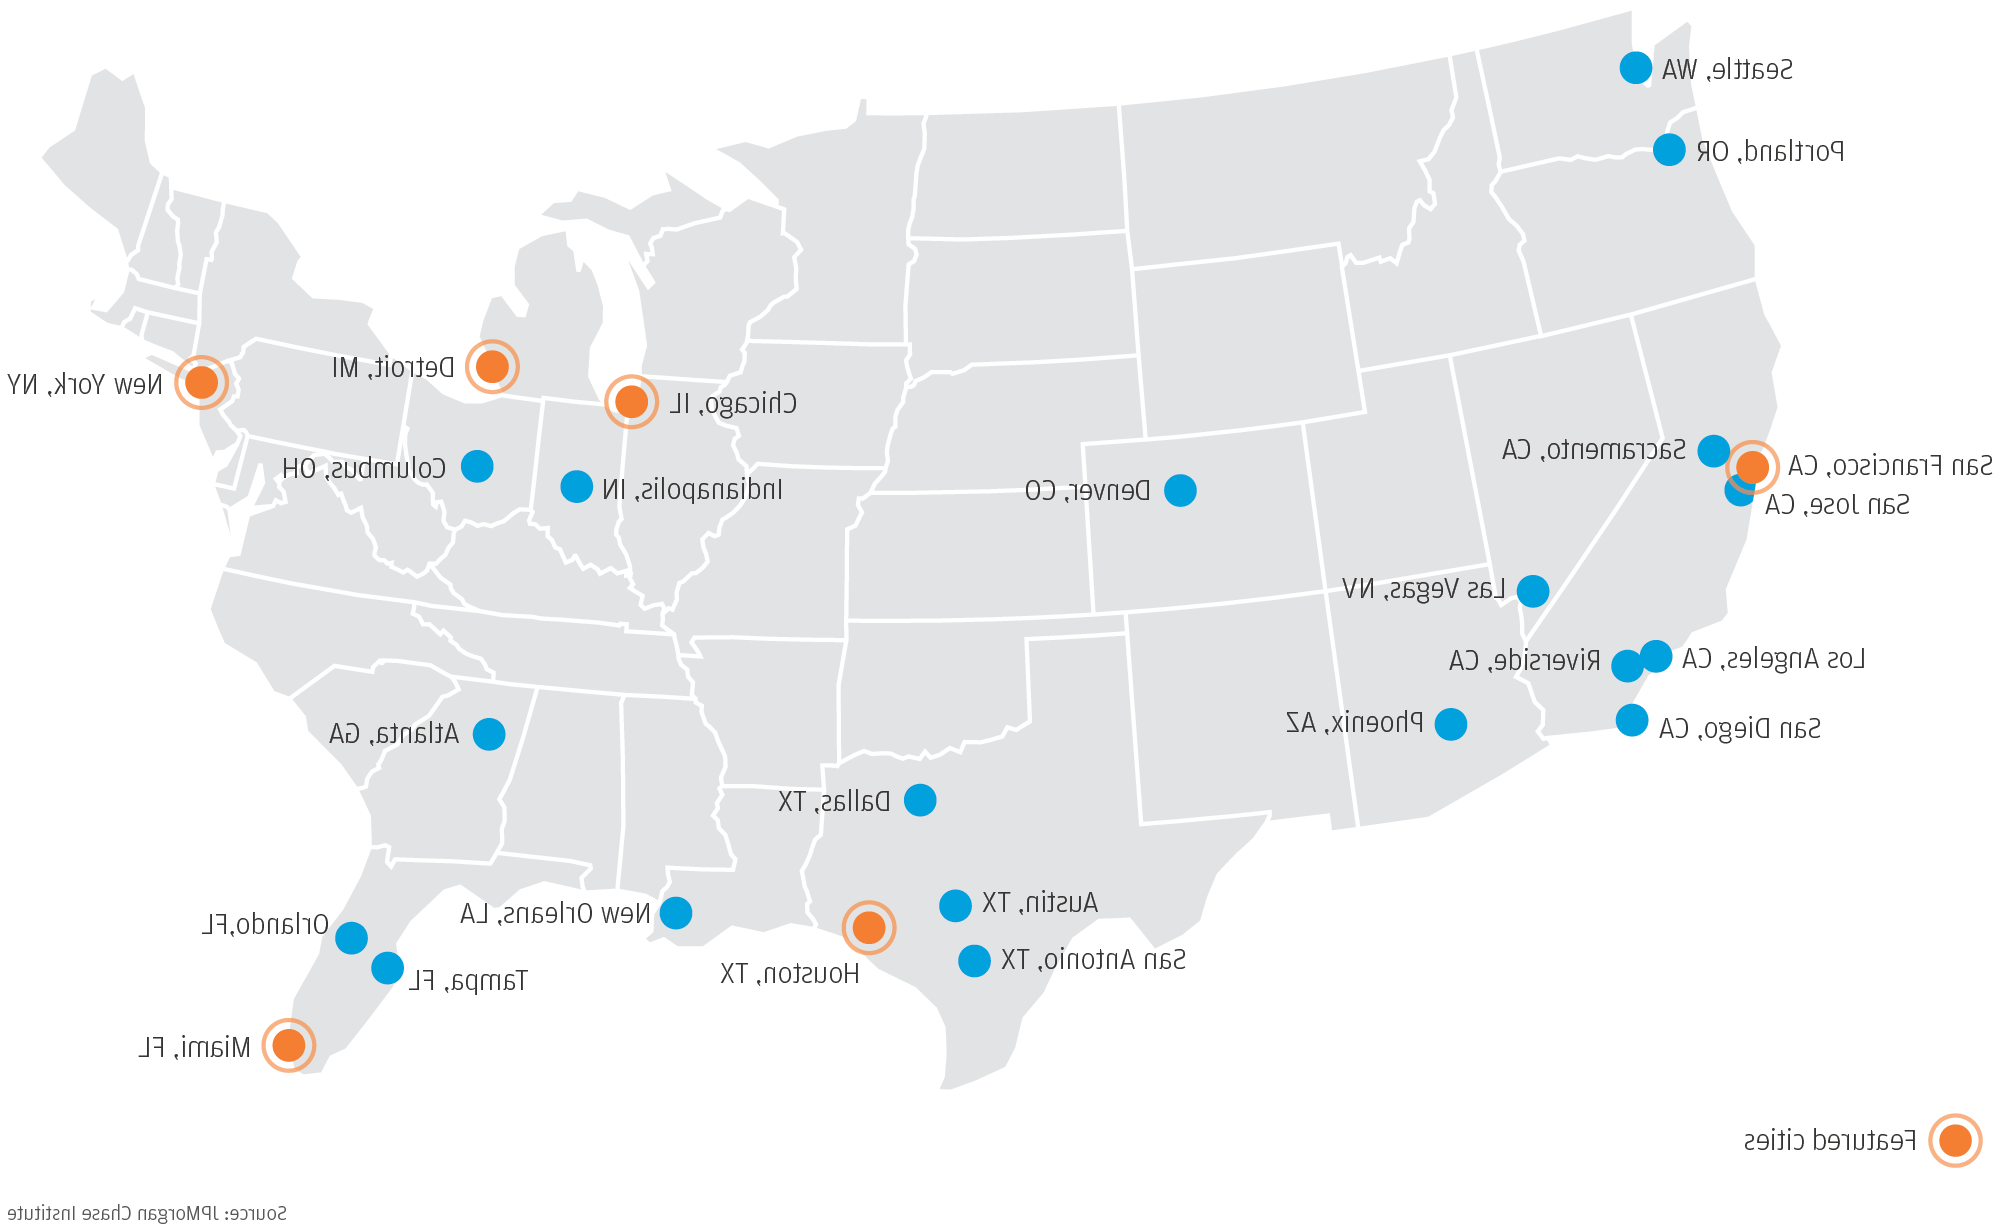 Map displaying metropolitan areas in our sample